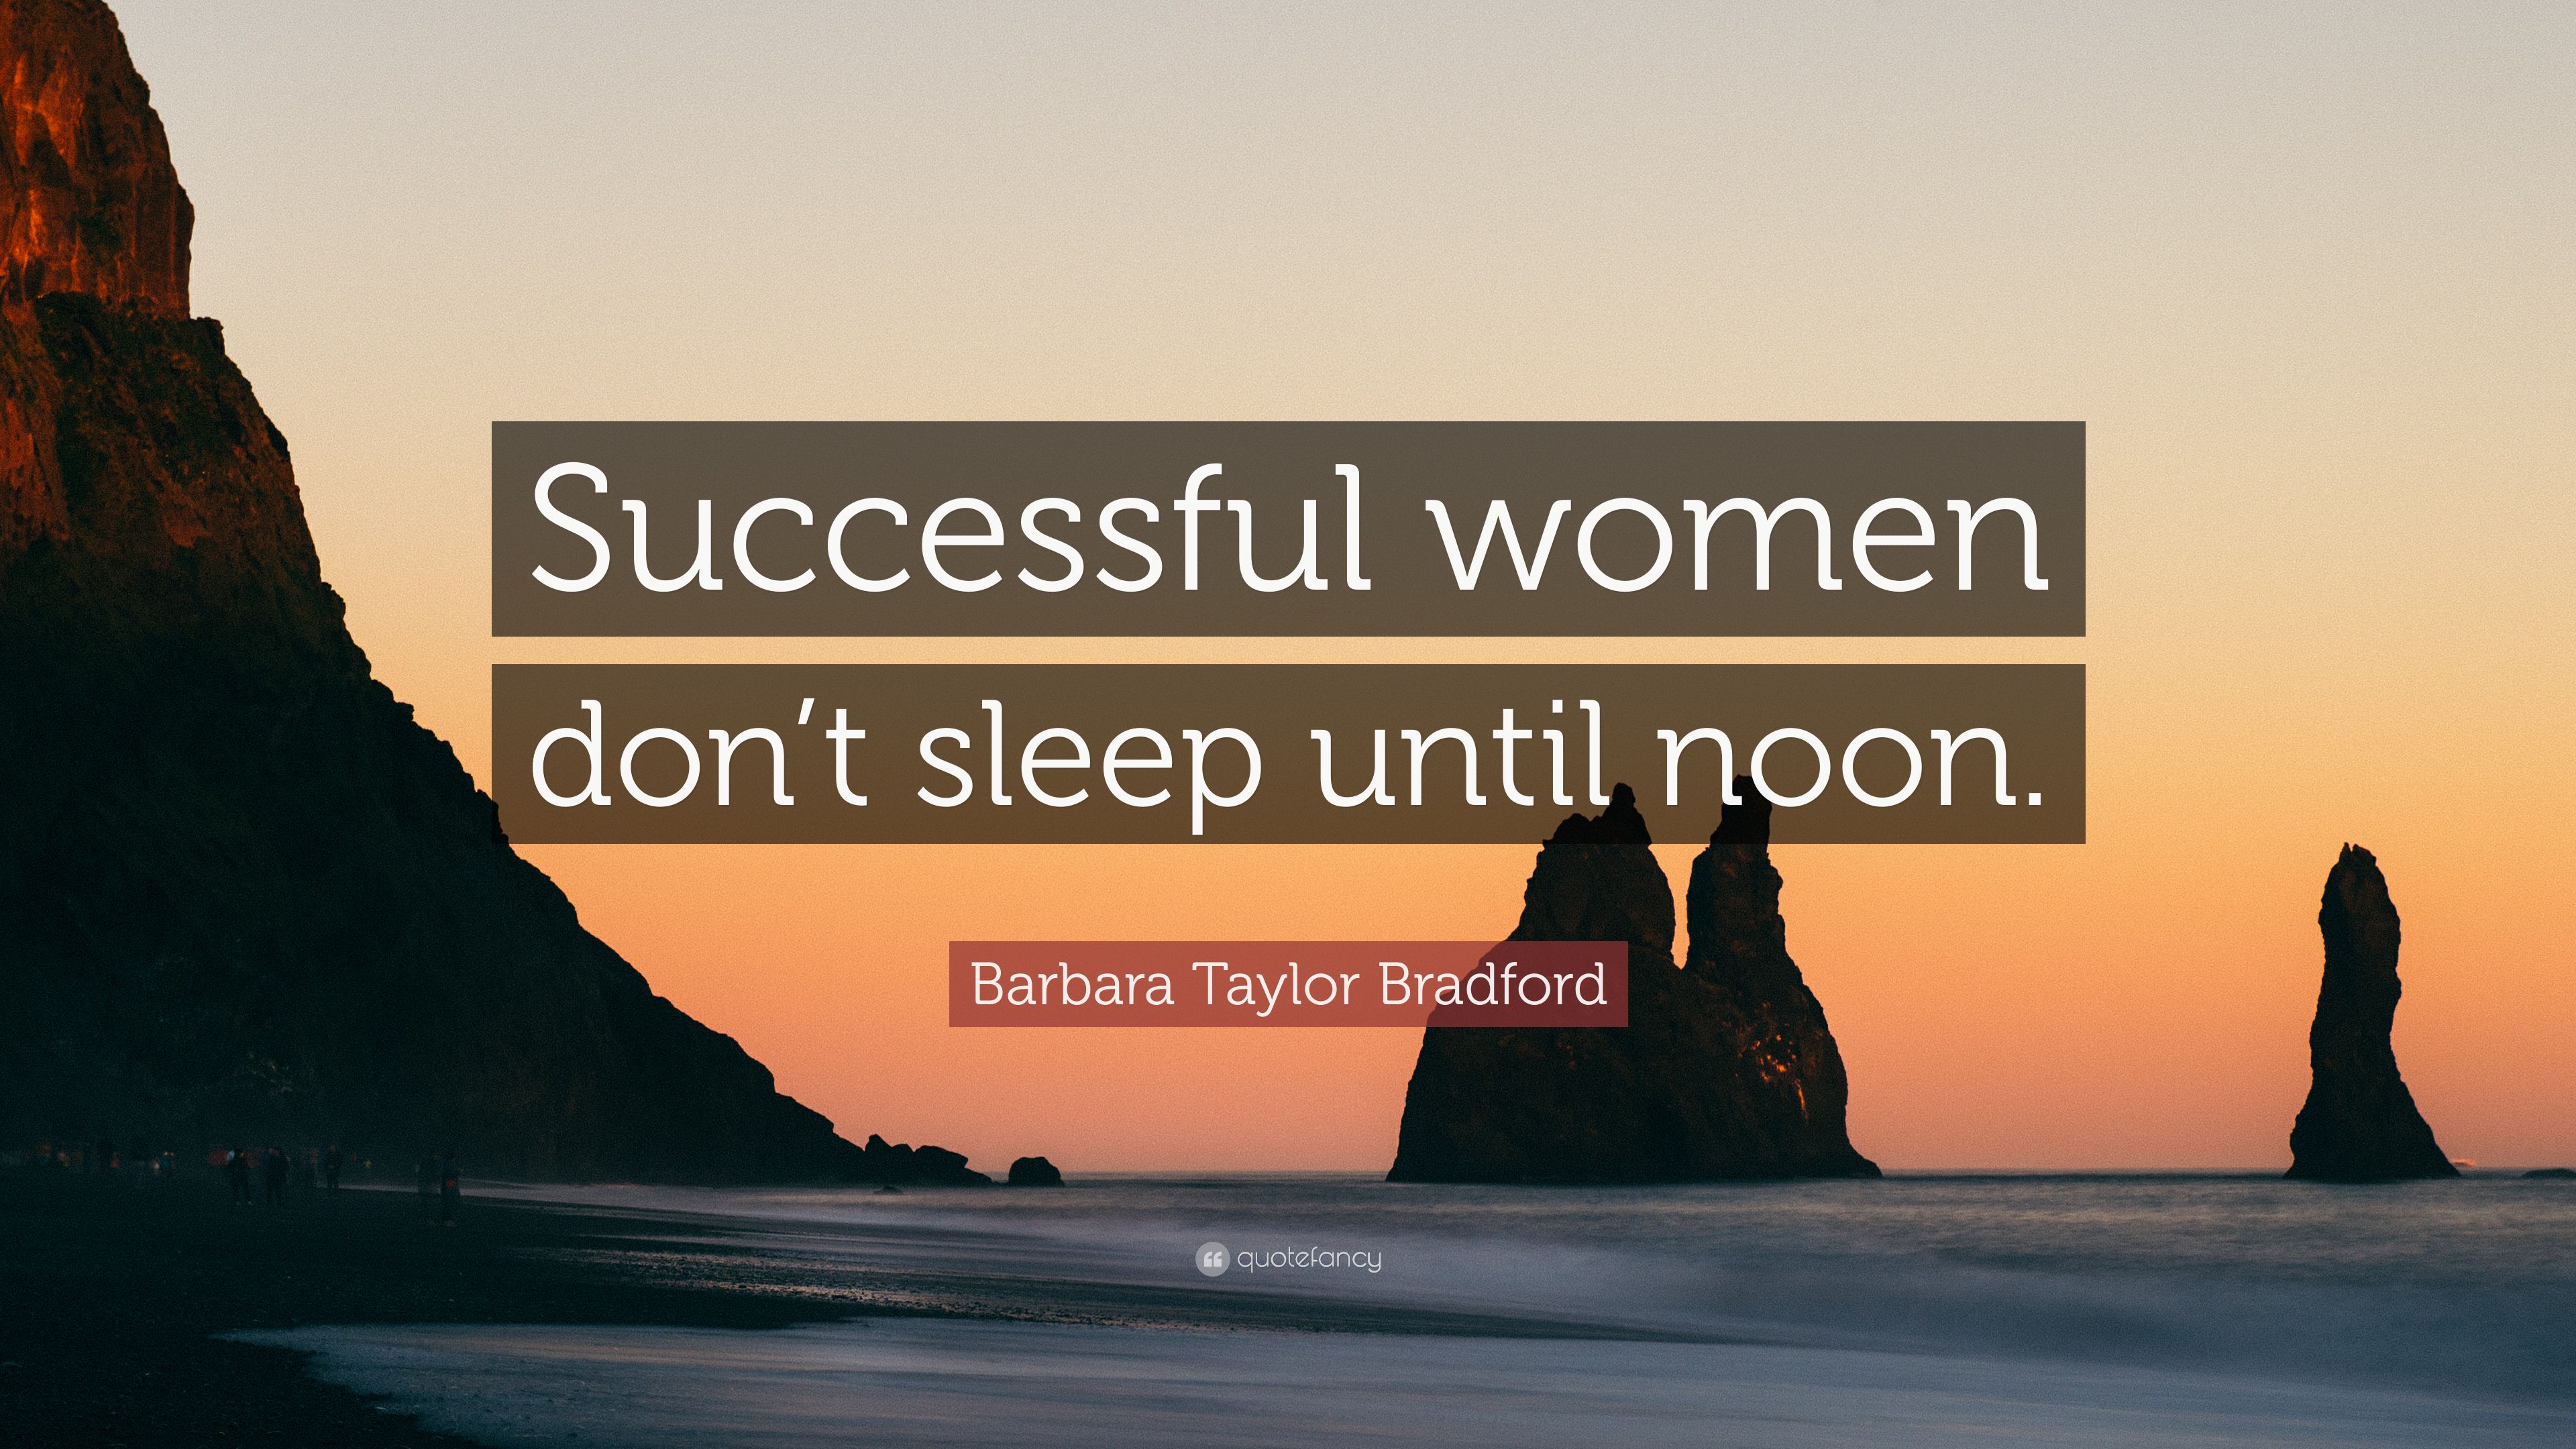 Barbara Taylor Bradford Quote: “Successful women don't sleep until